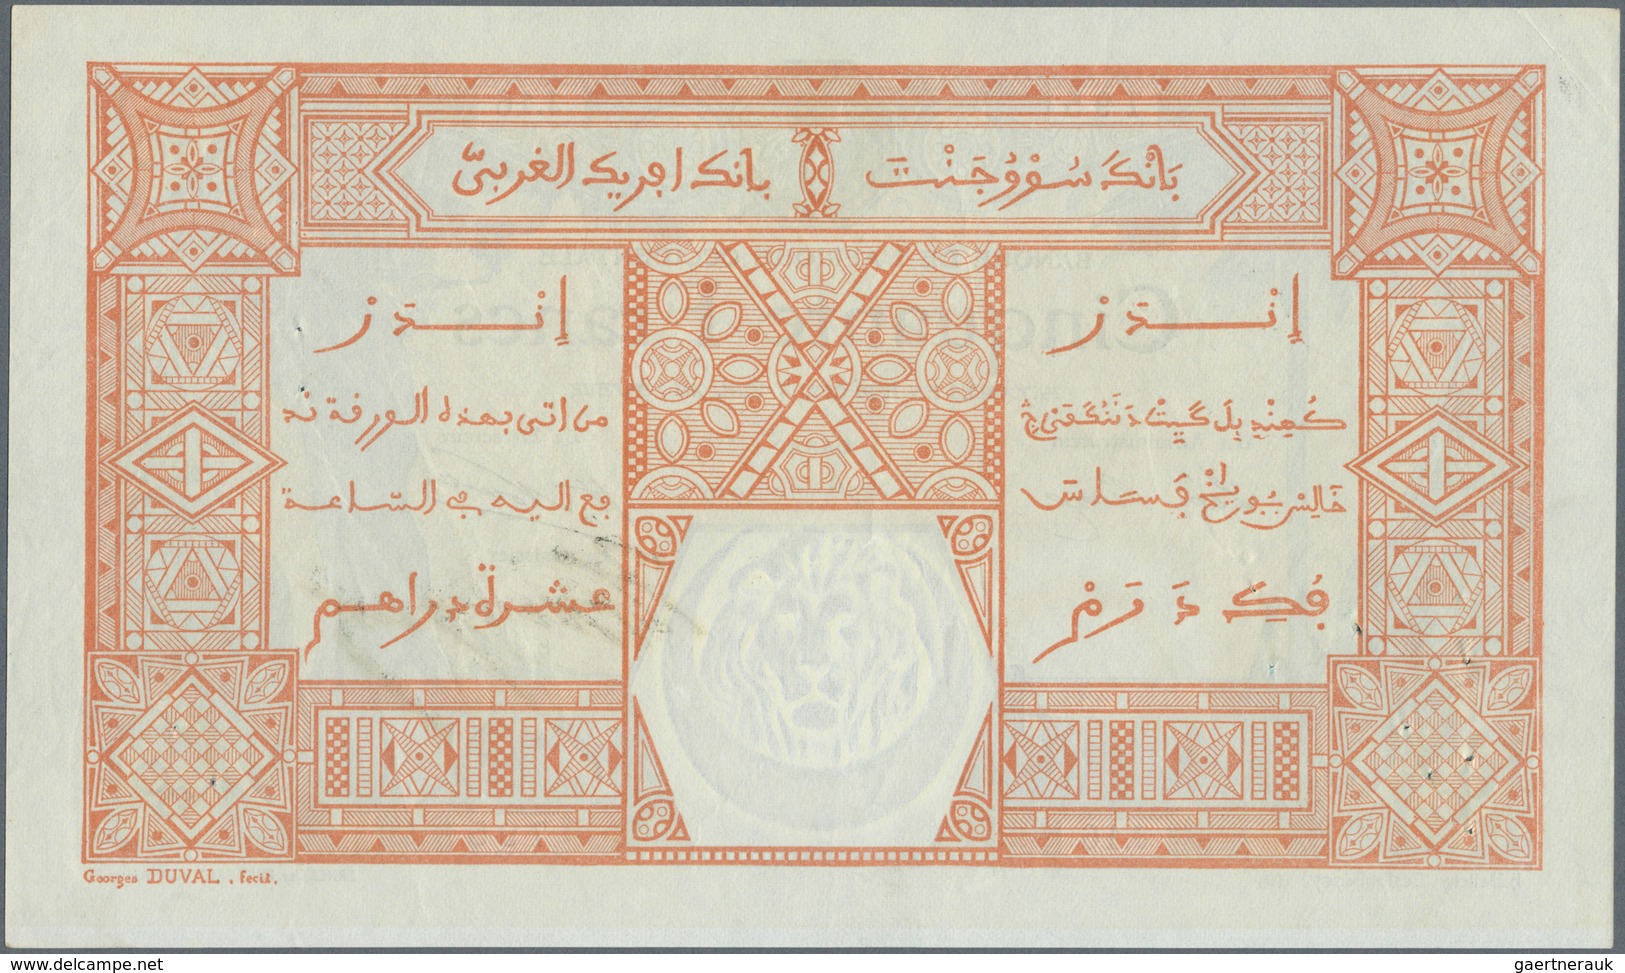 French West Africa / Französisch Westafrika: 50 Francs 1919 DAKAR P. 9Ba, Very Rare Early Date In Ex - Westafrikanischer Staaten